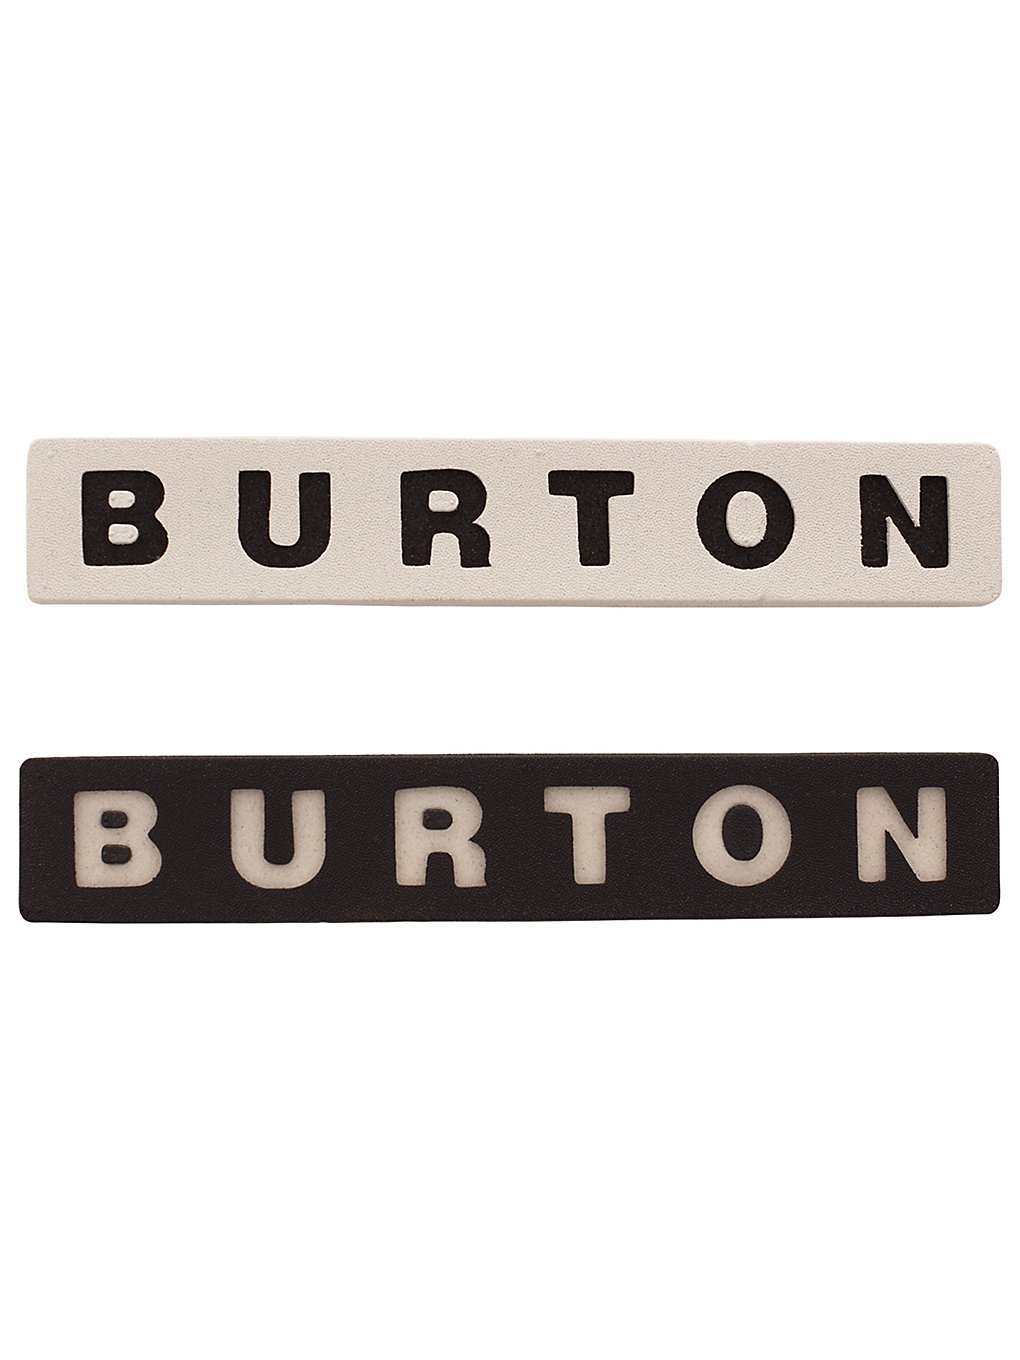 Burton Foam Mat Stomp Pad bar logo